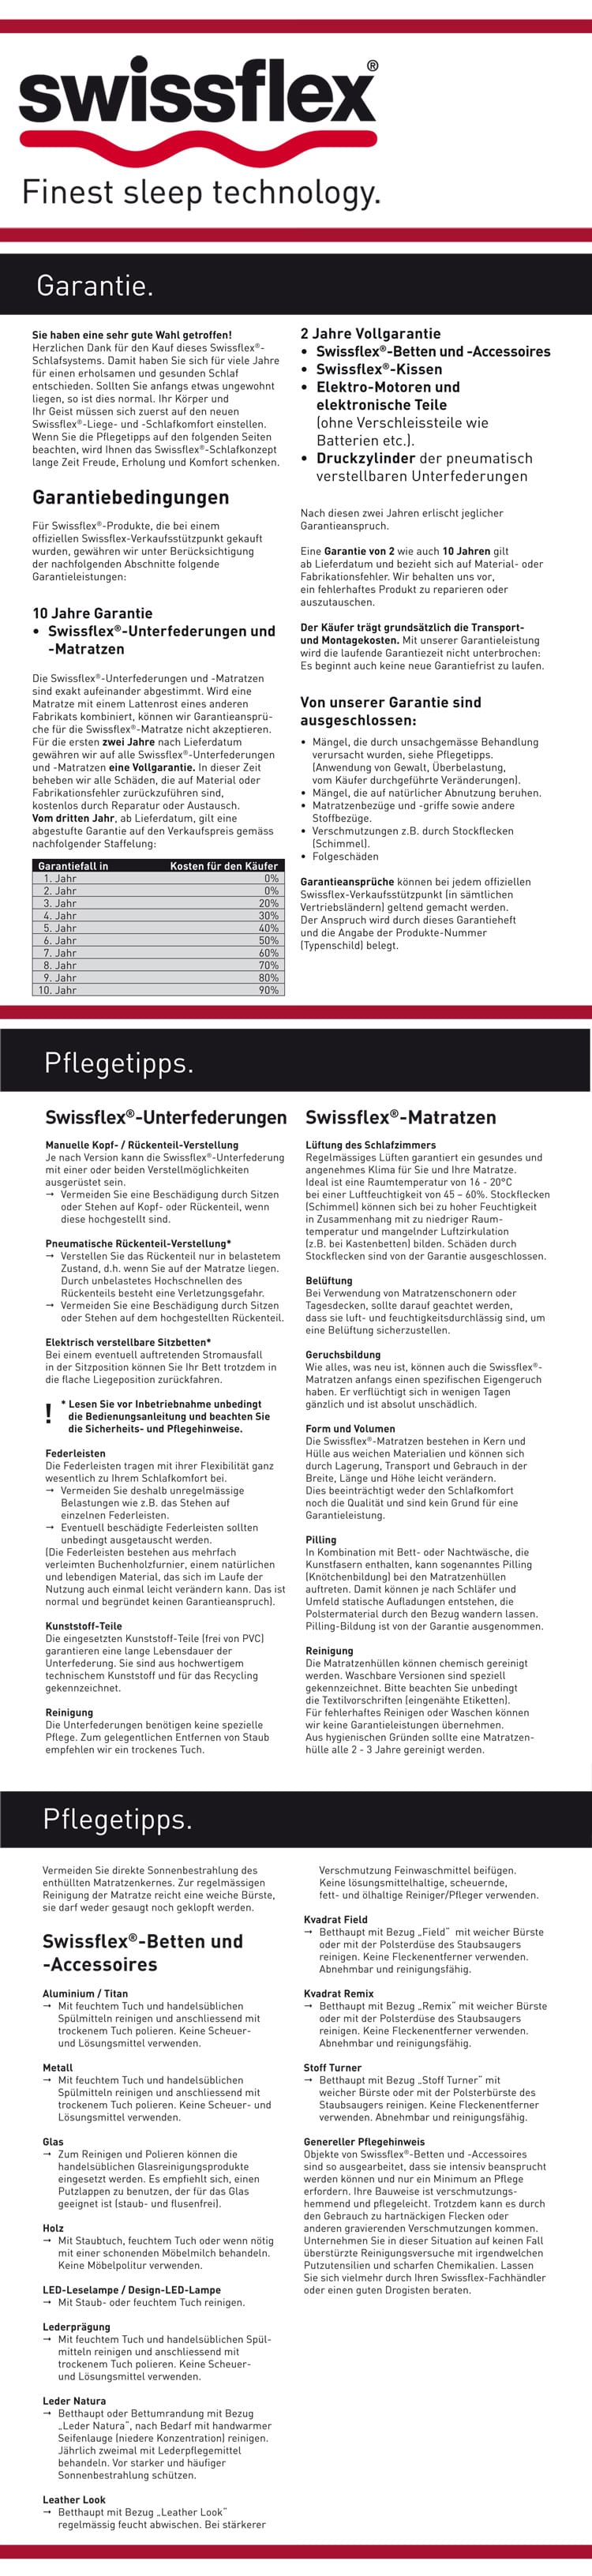 Swissflex Garantie